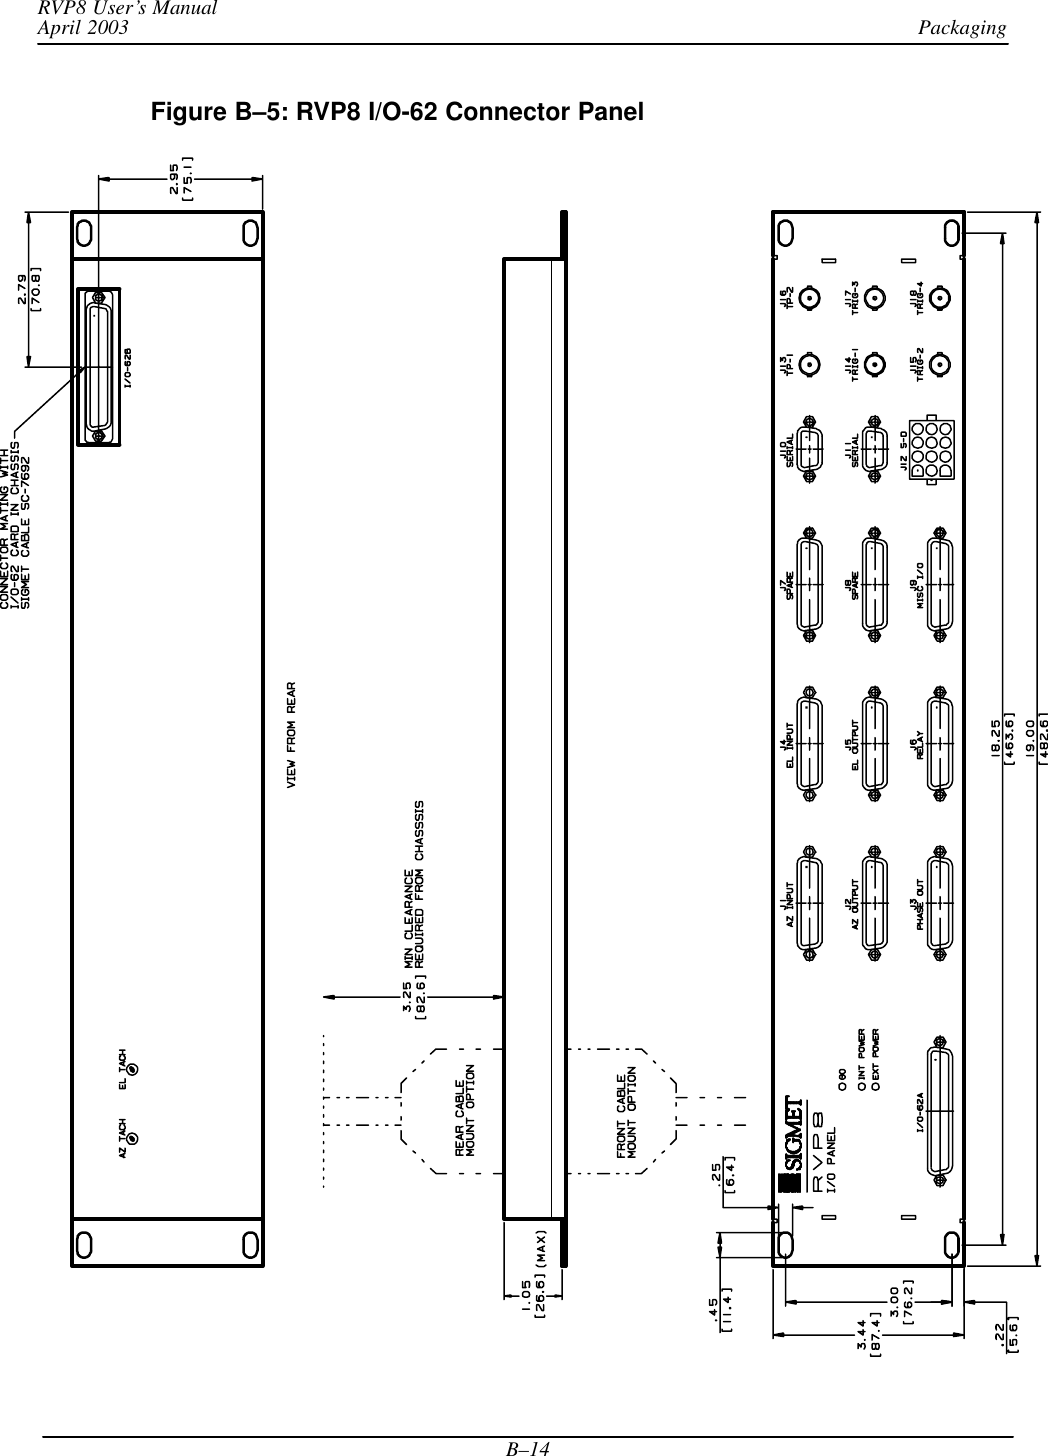 PackagingRVP8 User’s ManualApril 2003B–14Figure B–5: RVP8 I/O-62 Connector Panel